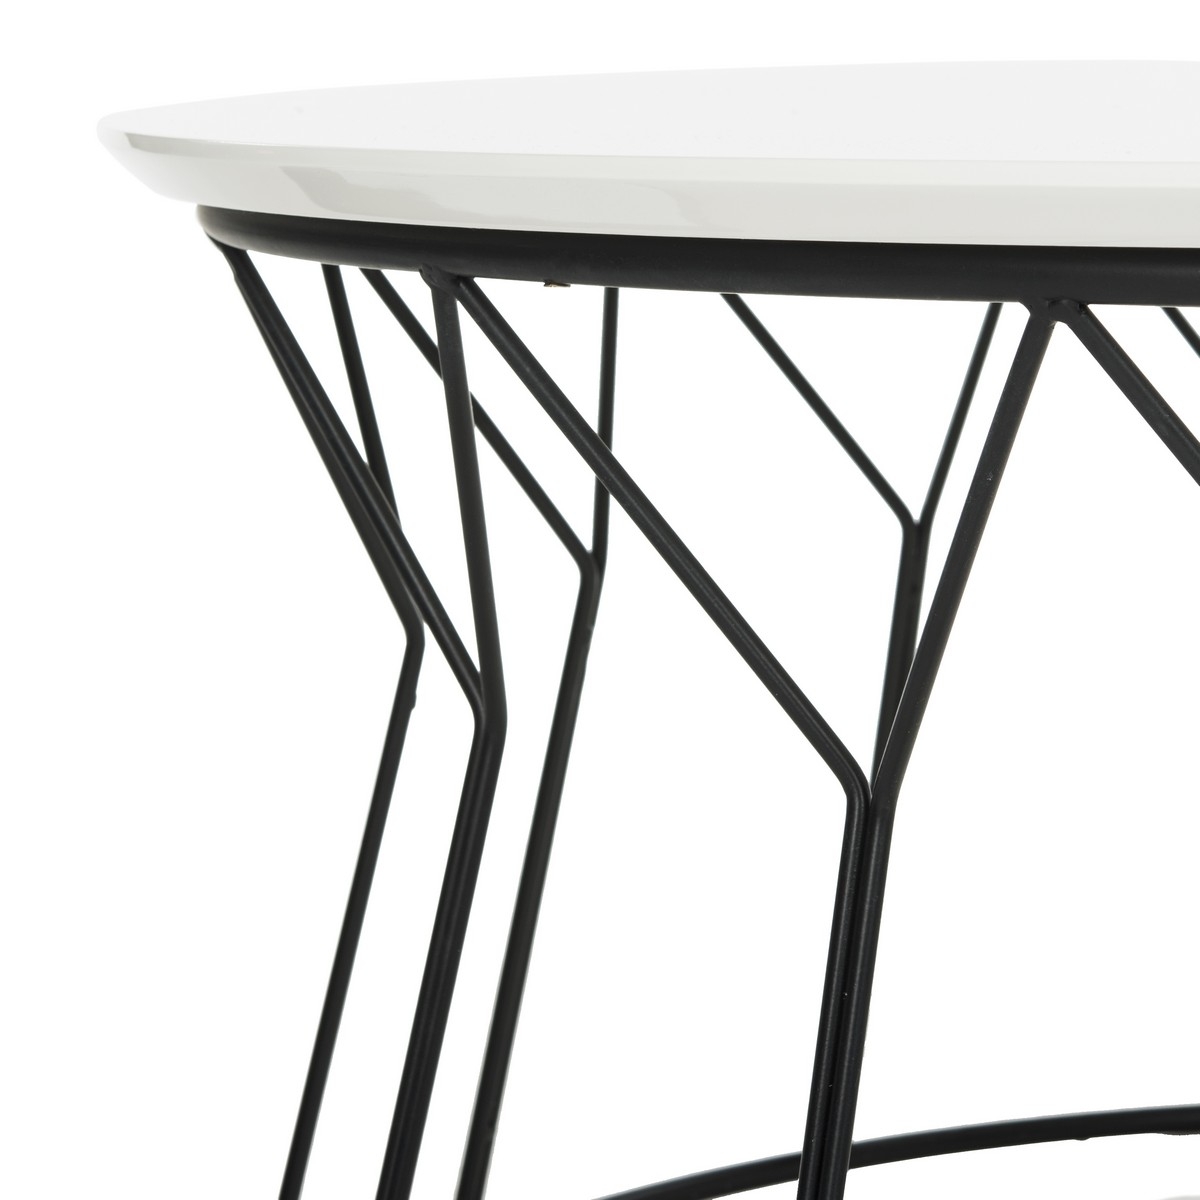 Deion Retro Mid Century Lacquer Coffee Table - White/Black - Arlo Home - Image 2